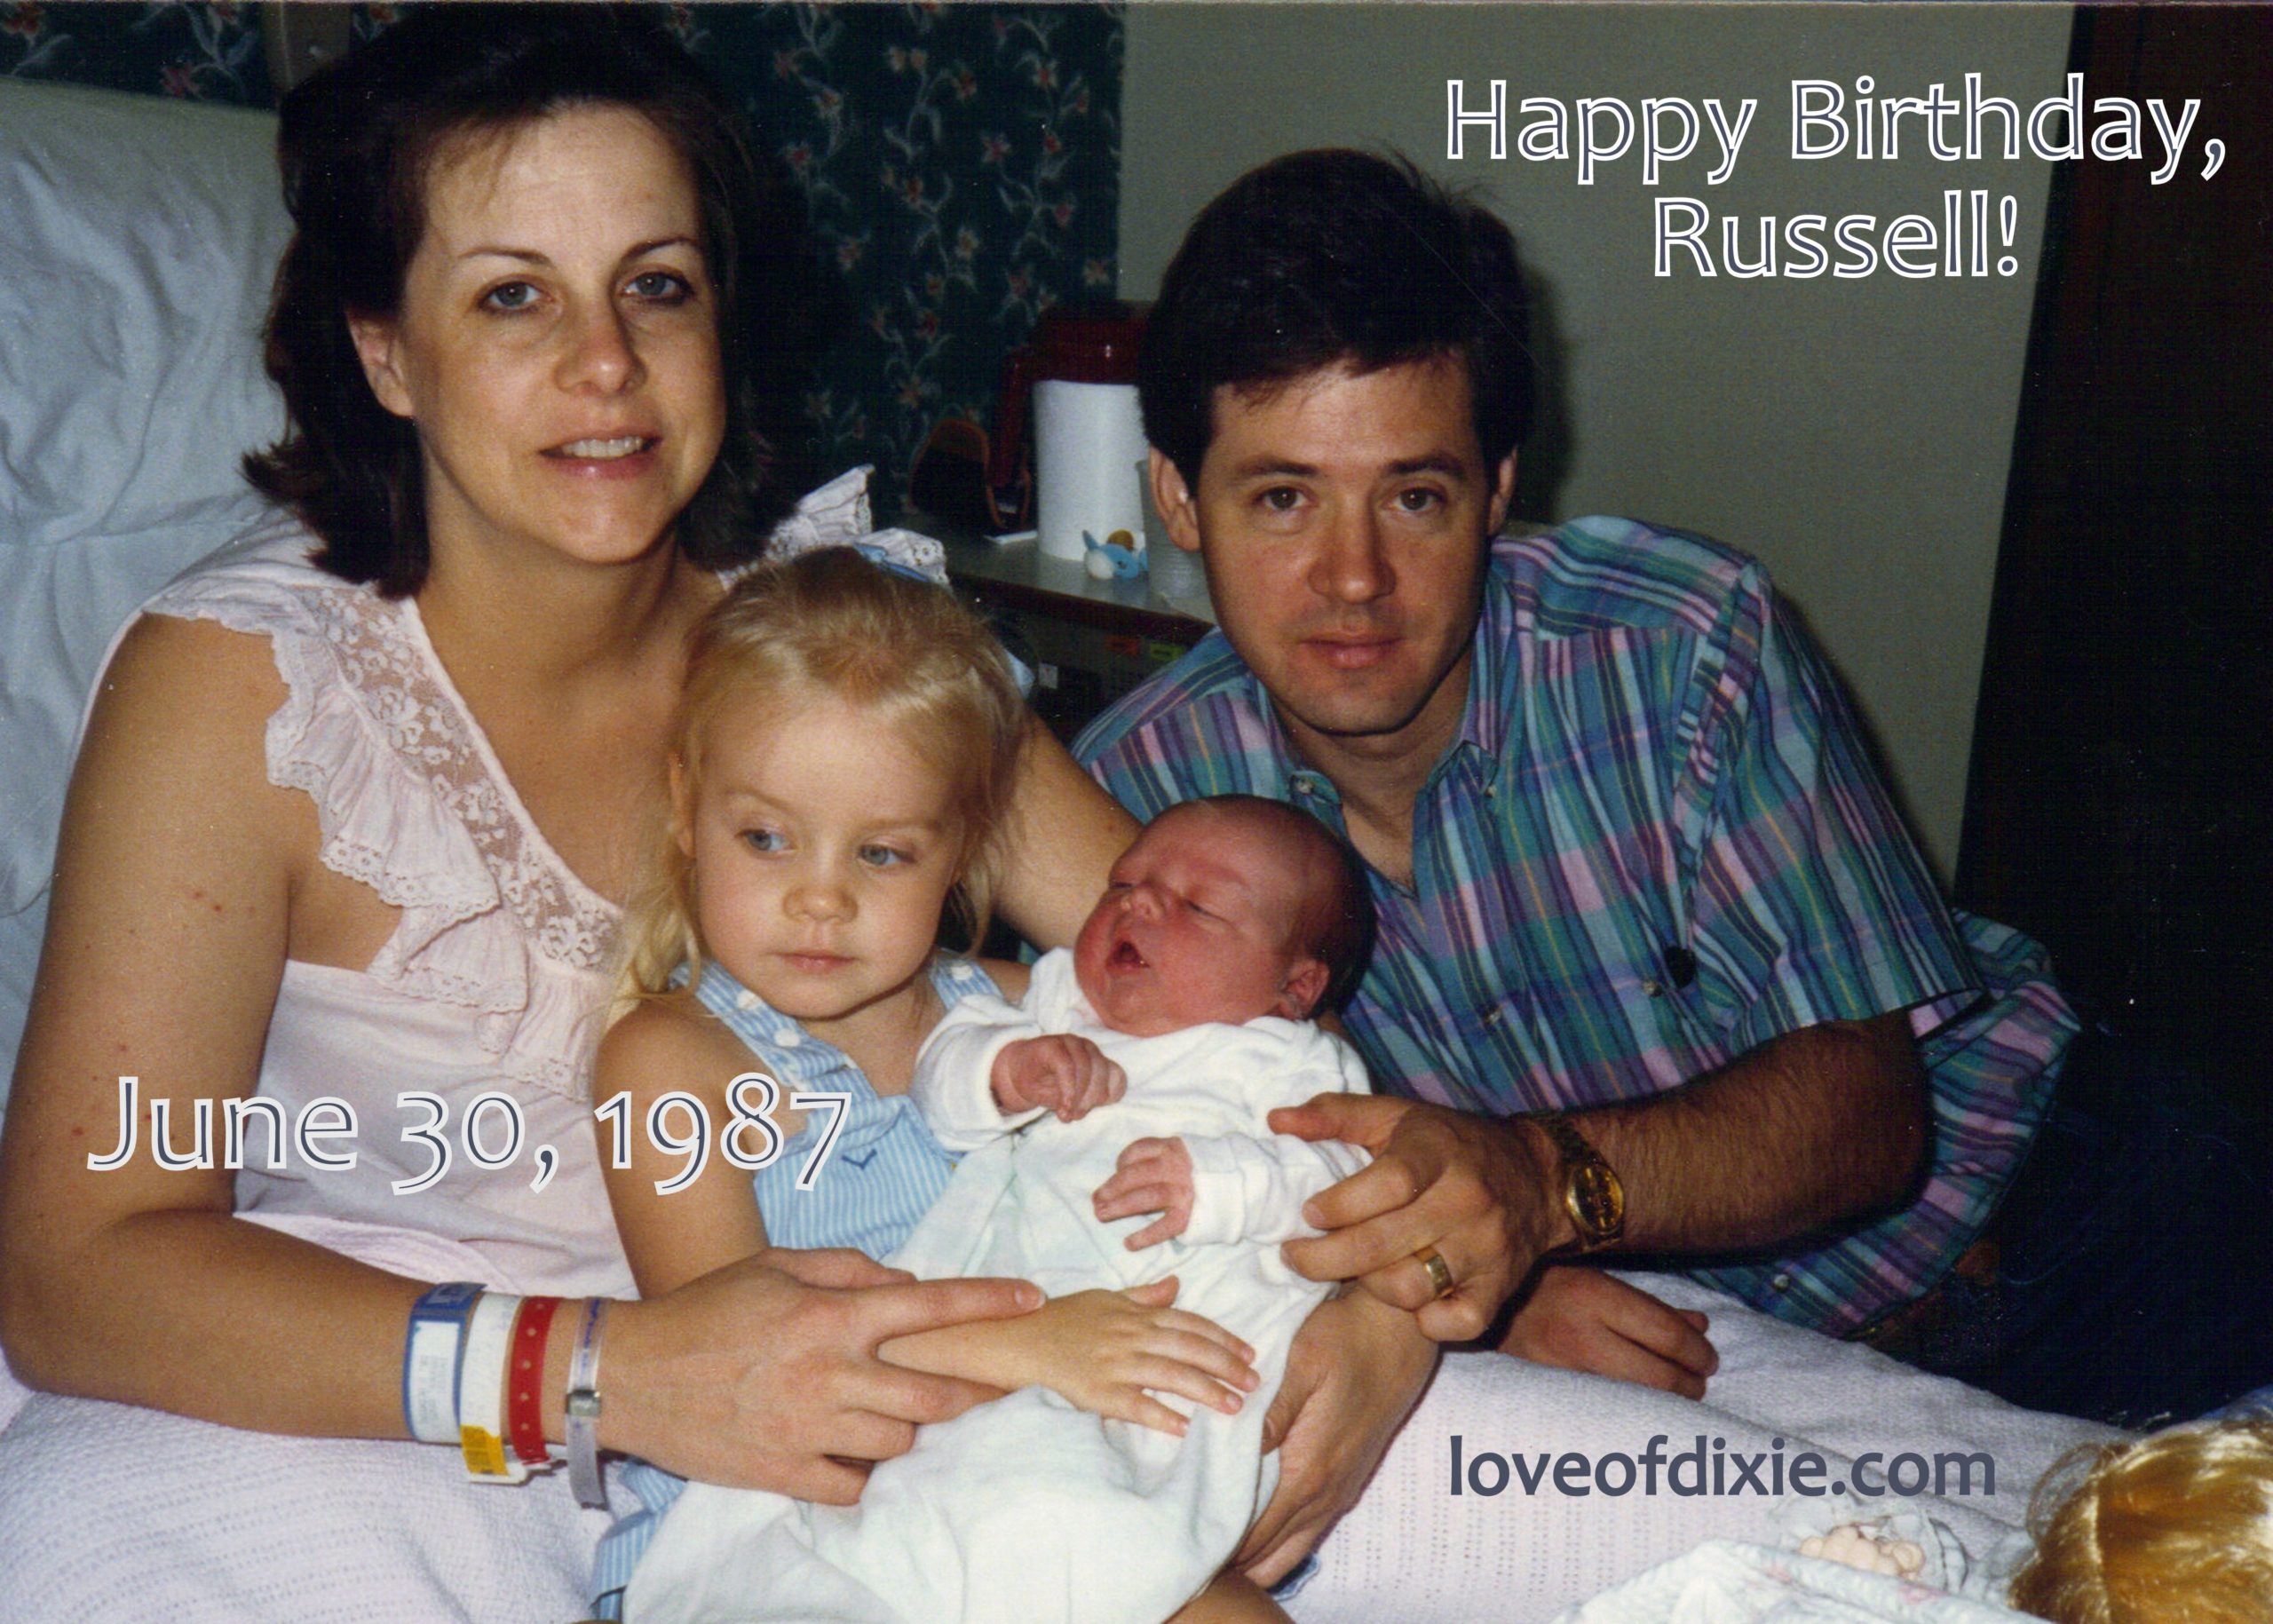 Happy Birthday Russell